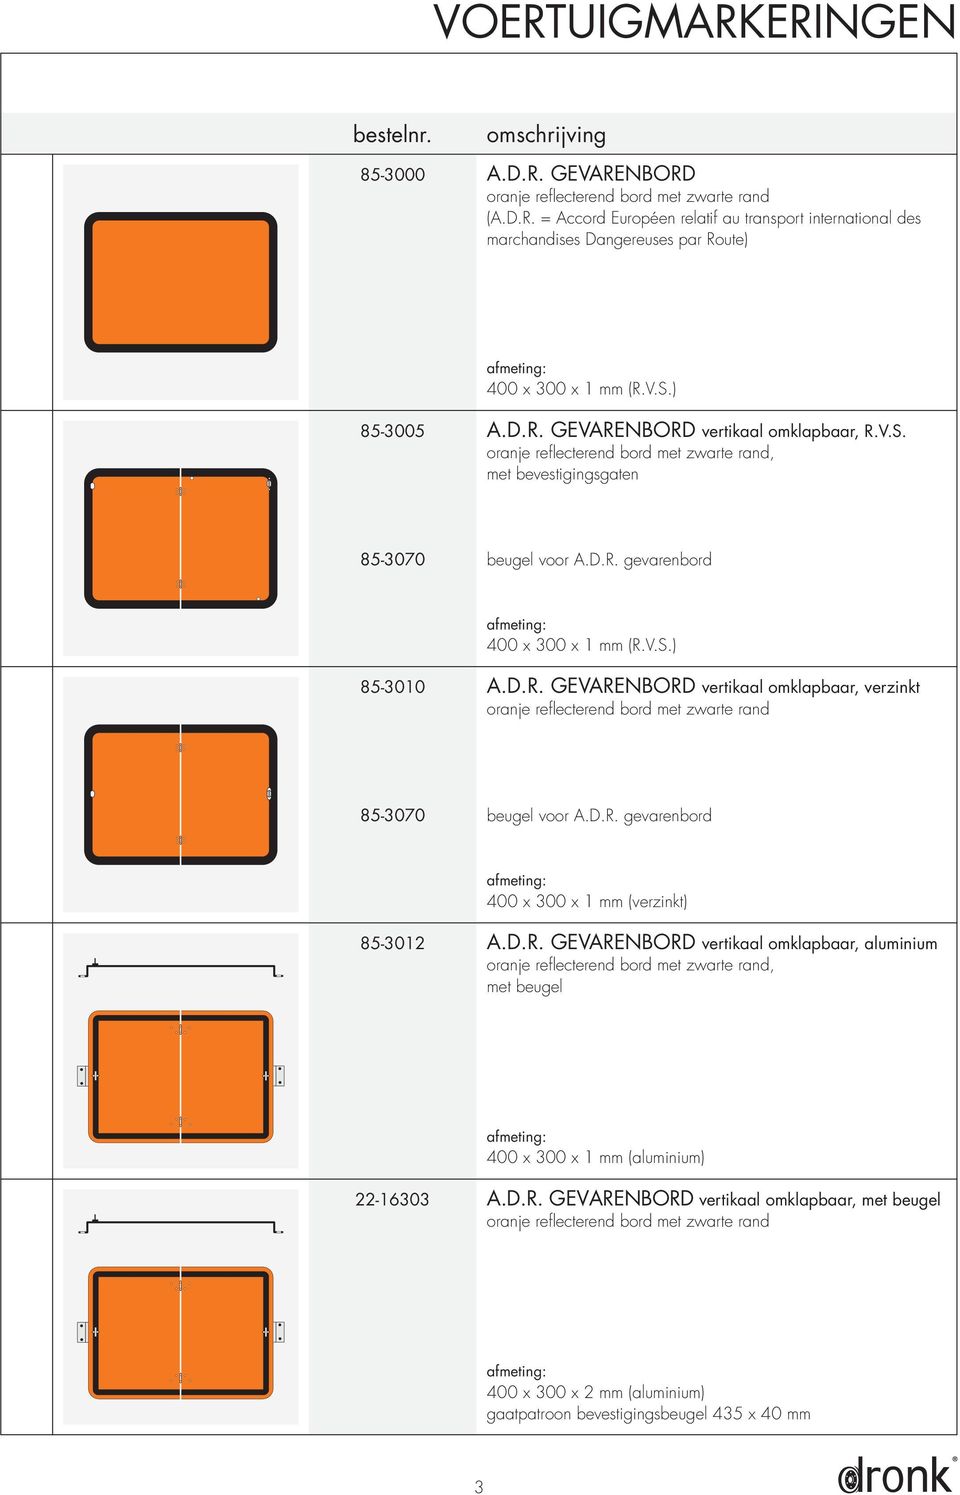 D.R. gevarenbord 400 x 300 x 1 mm (verzinkt) 85-3012 A.D.R. GEVARENBORD vertikaal omklapbaar, aluminium oranje reflecterend bord met zwarte rand, met beugel 400 x 300 x 1 mm (aluminium) 22-16303 A.D.R. GEVARENBORD vertikaal omklapbaar, met beugel oranje reflecterend bord met zwarte rand 400 x 300 x 2 mm (aluminium) gaatpatroon bevestigingsbeugel 435 x 40 mm 3